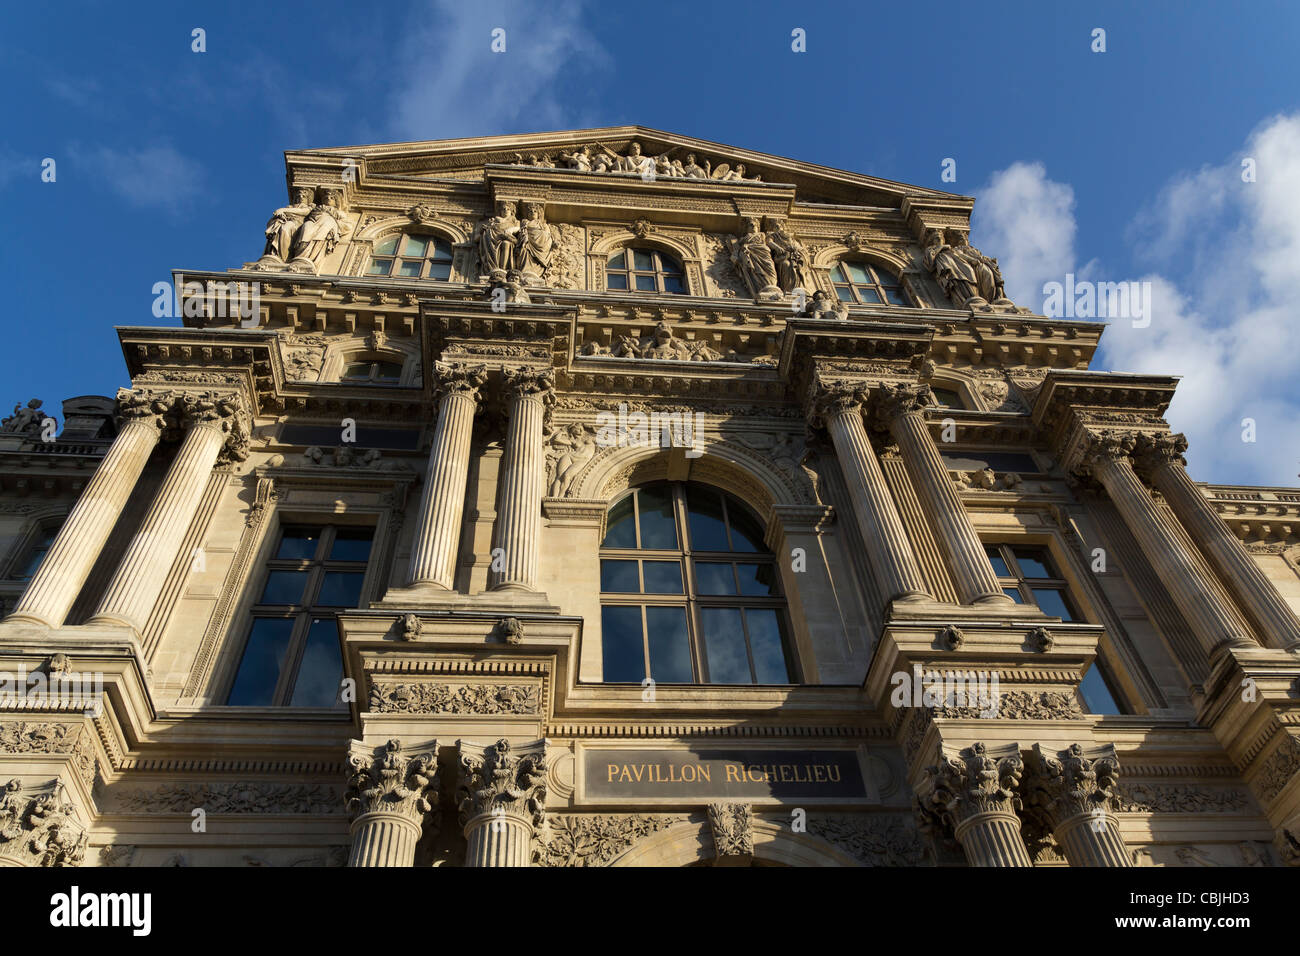 Pavillon Richelieu, Museo del Louvre, Parigi, Francia Foto Stock